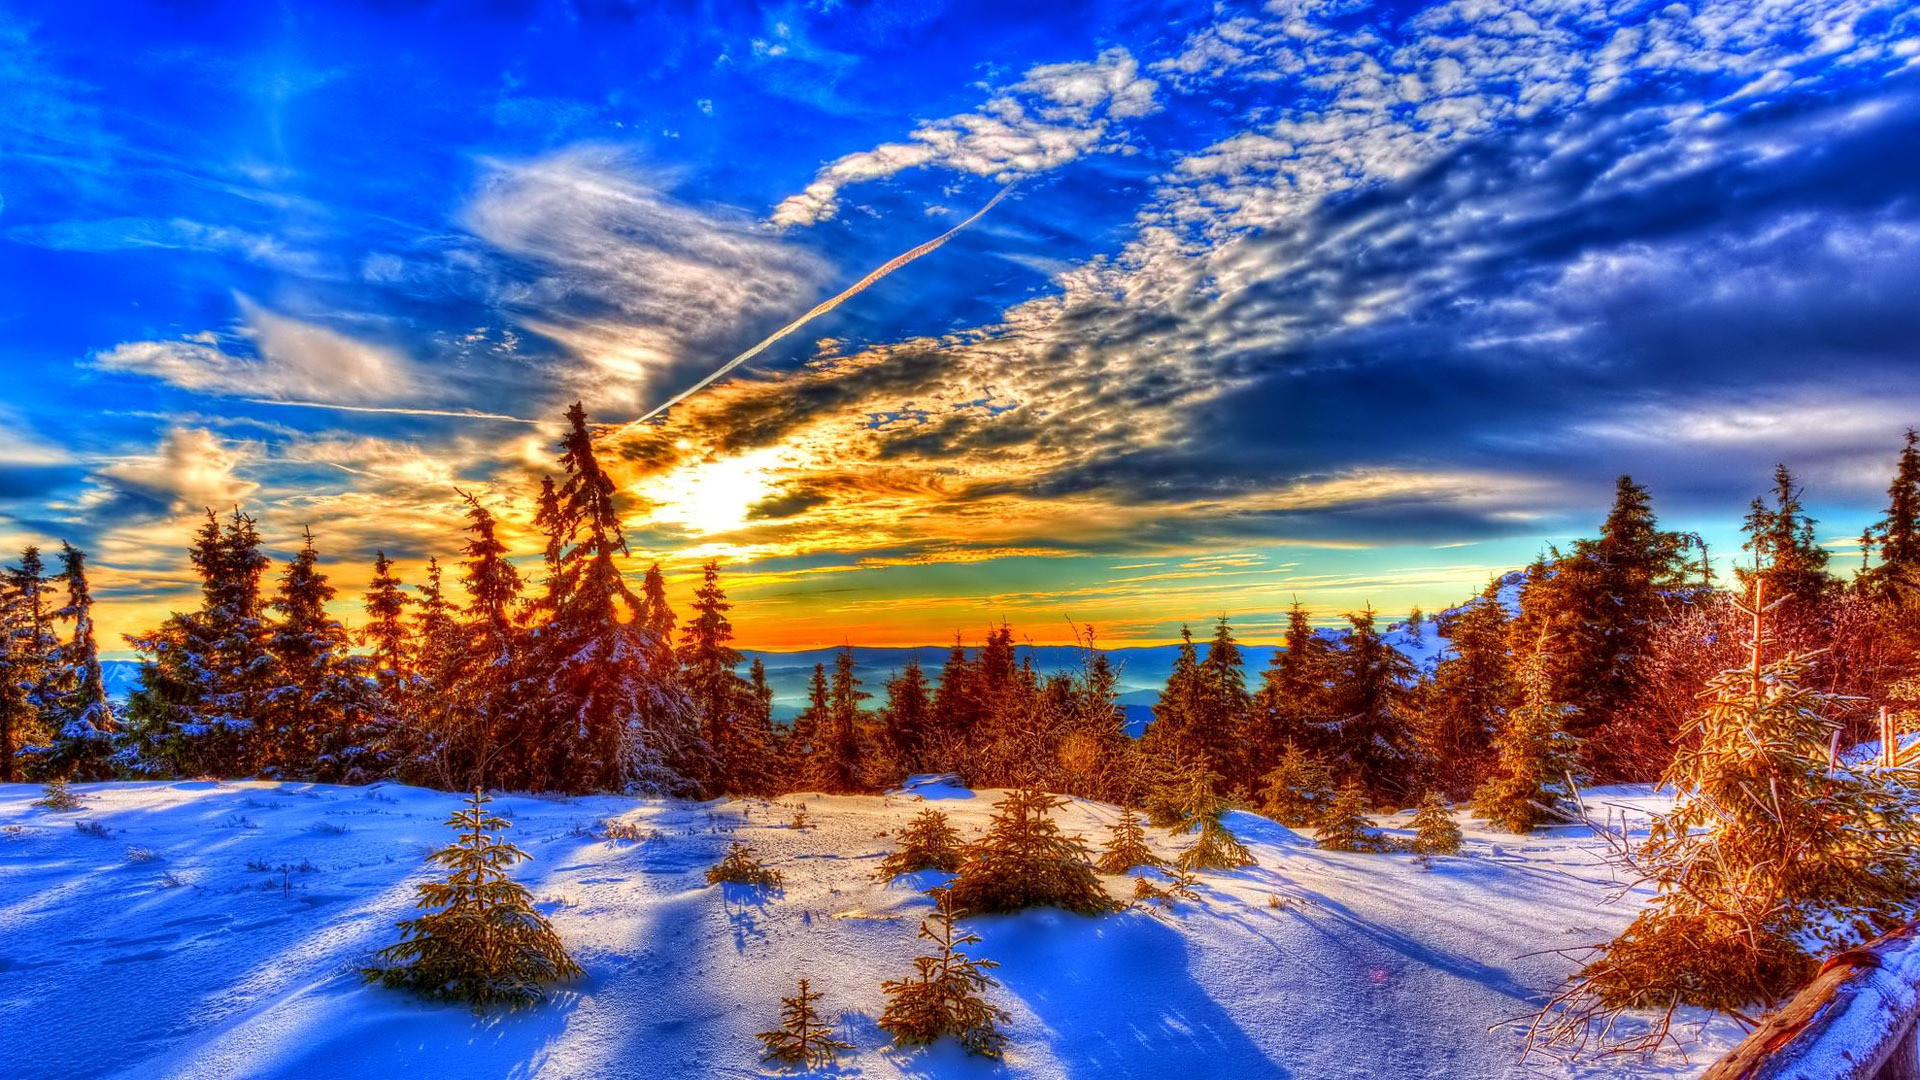 Desktop Backgrounds Winter (59+ images)